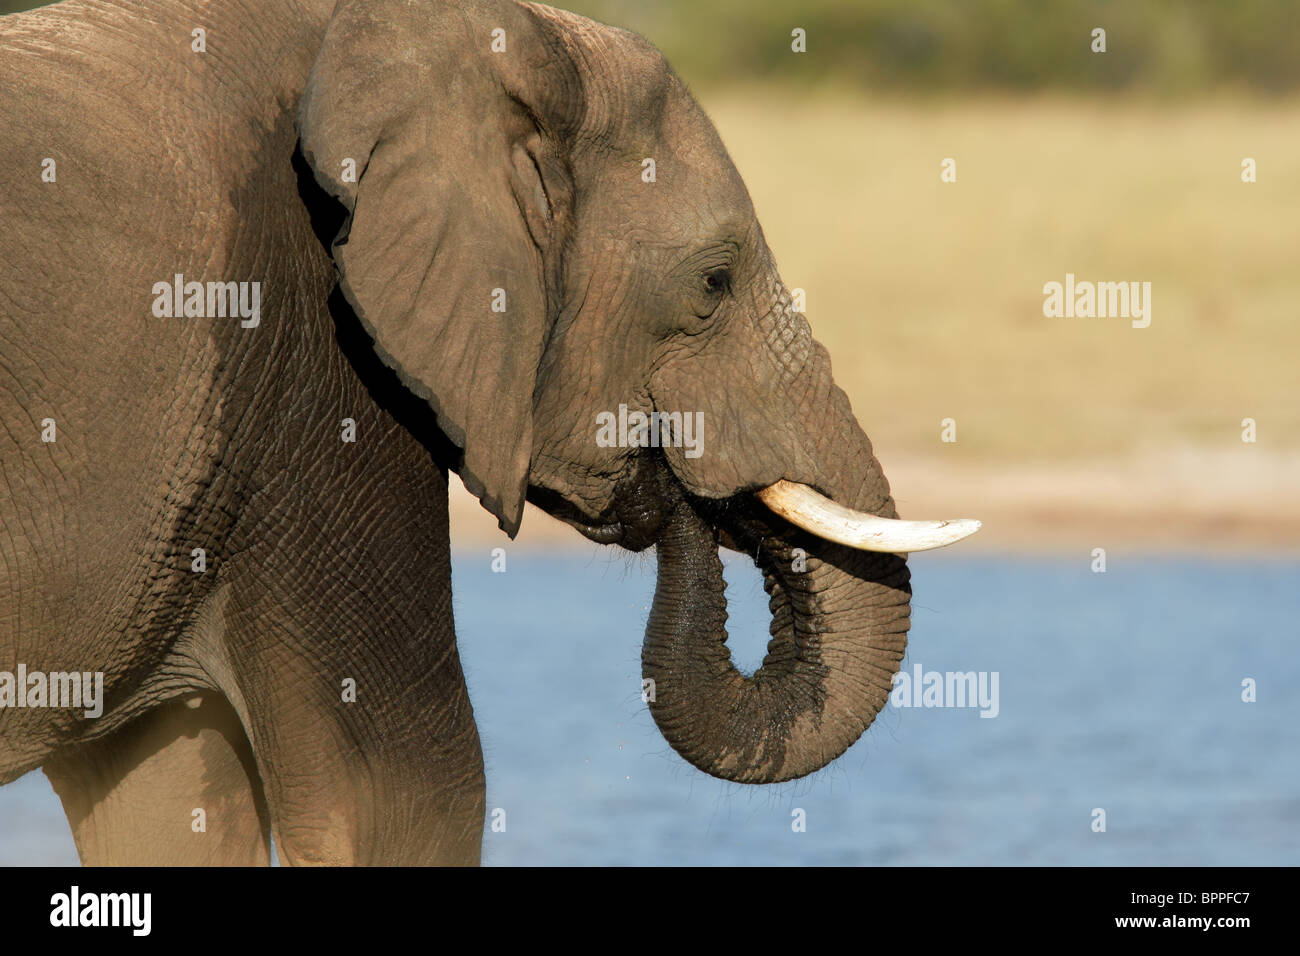 Ritratto di un elefante africano (Loxodonta africana) acqua potabile, Parco Nazionale di Hwange, Zimbabwe, Sud Africa Foto Stock